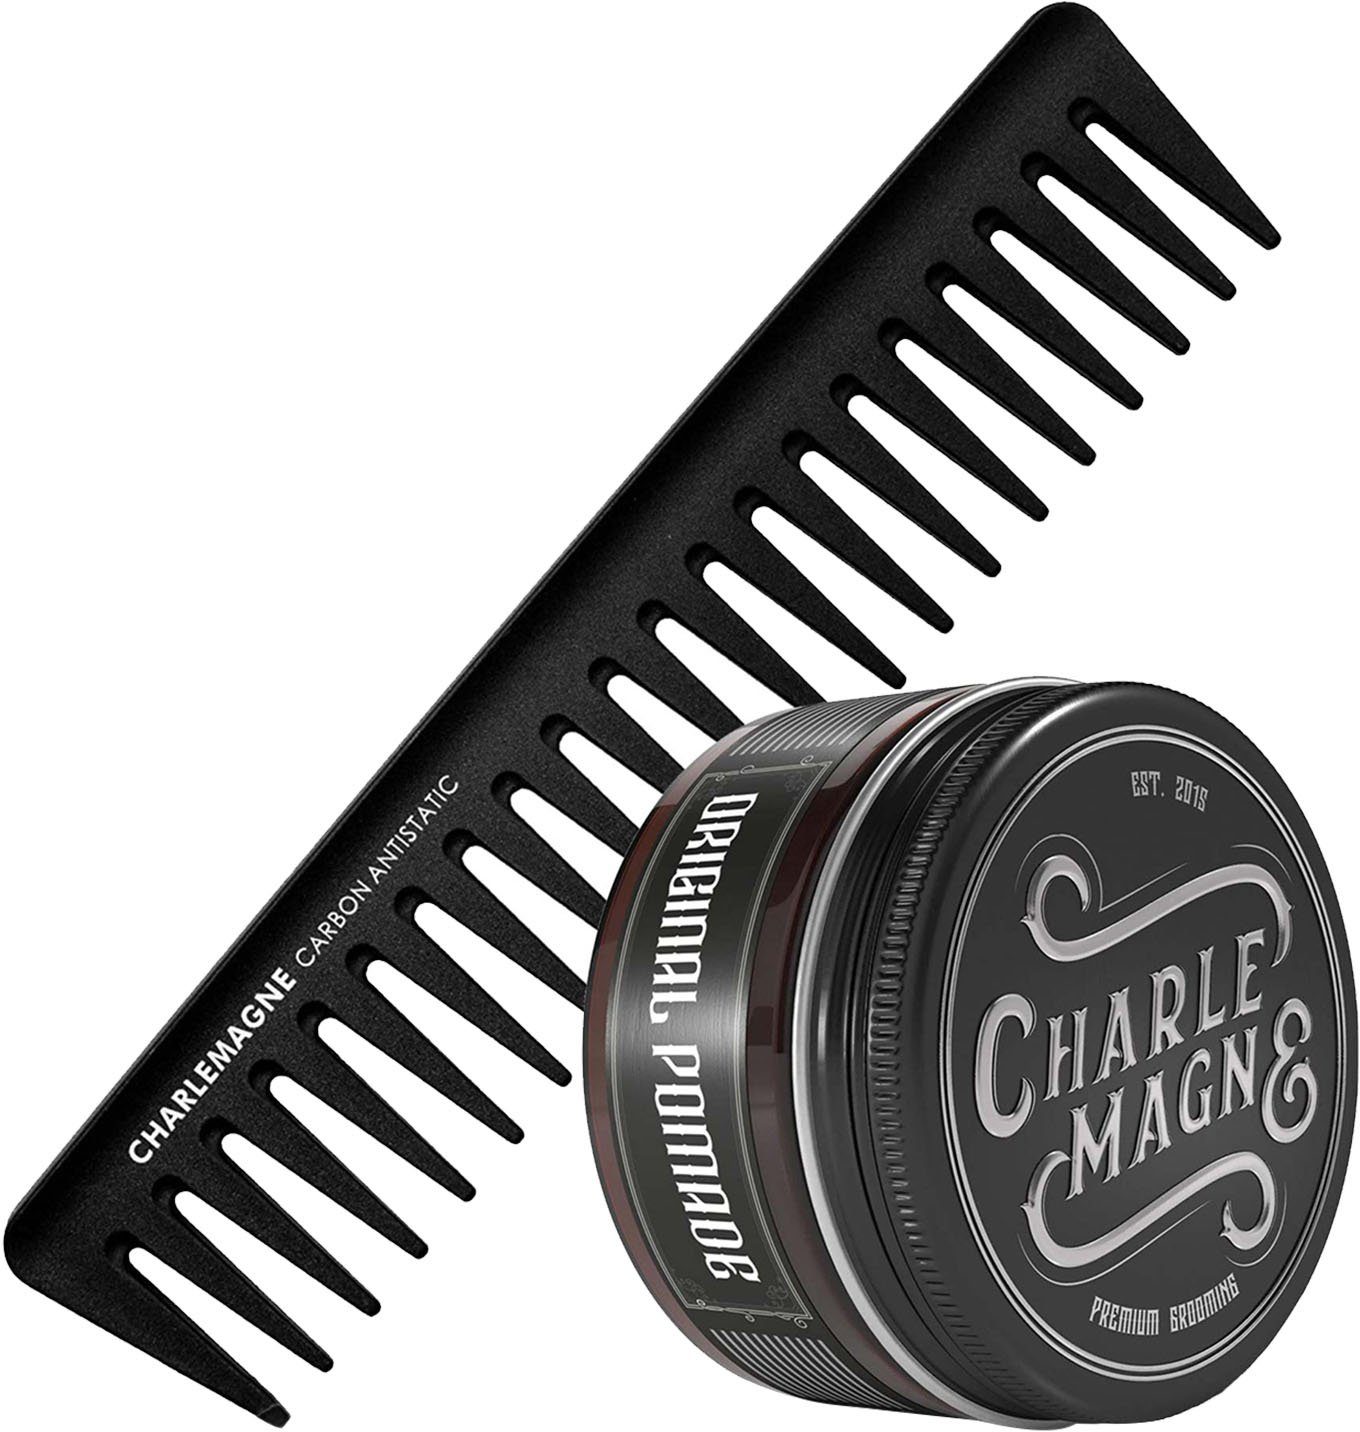 Erstaunlich niedrige Preise CHARLEMAGNE Haarpflege-Set The OG's Essentials, 2-tlg